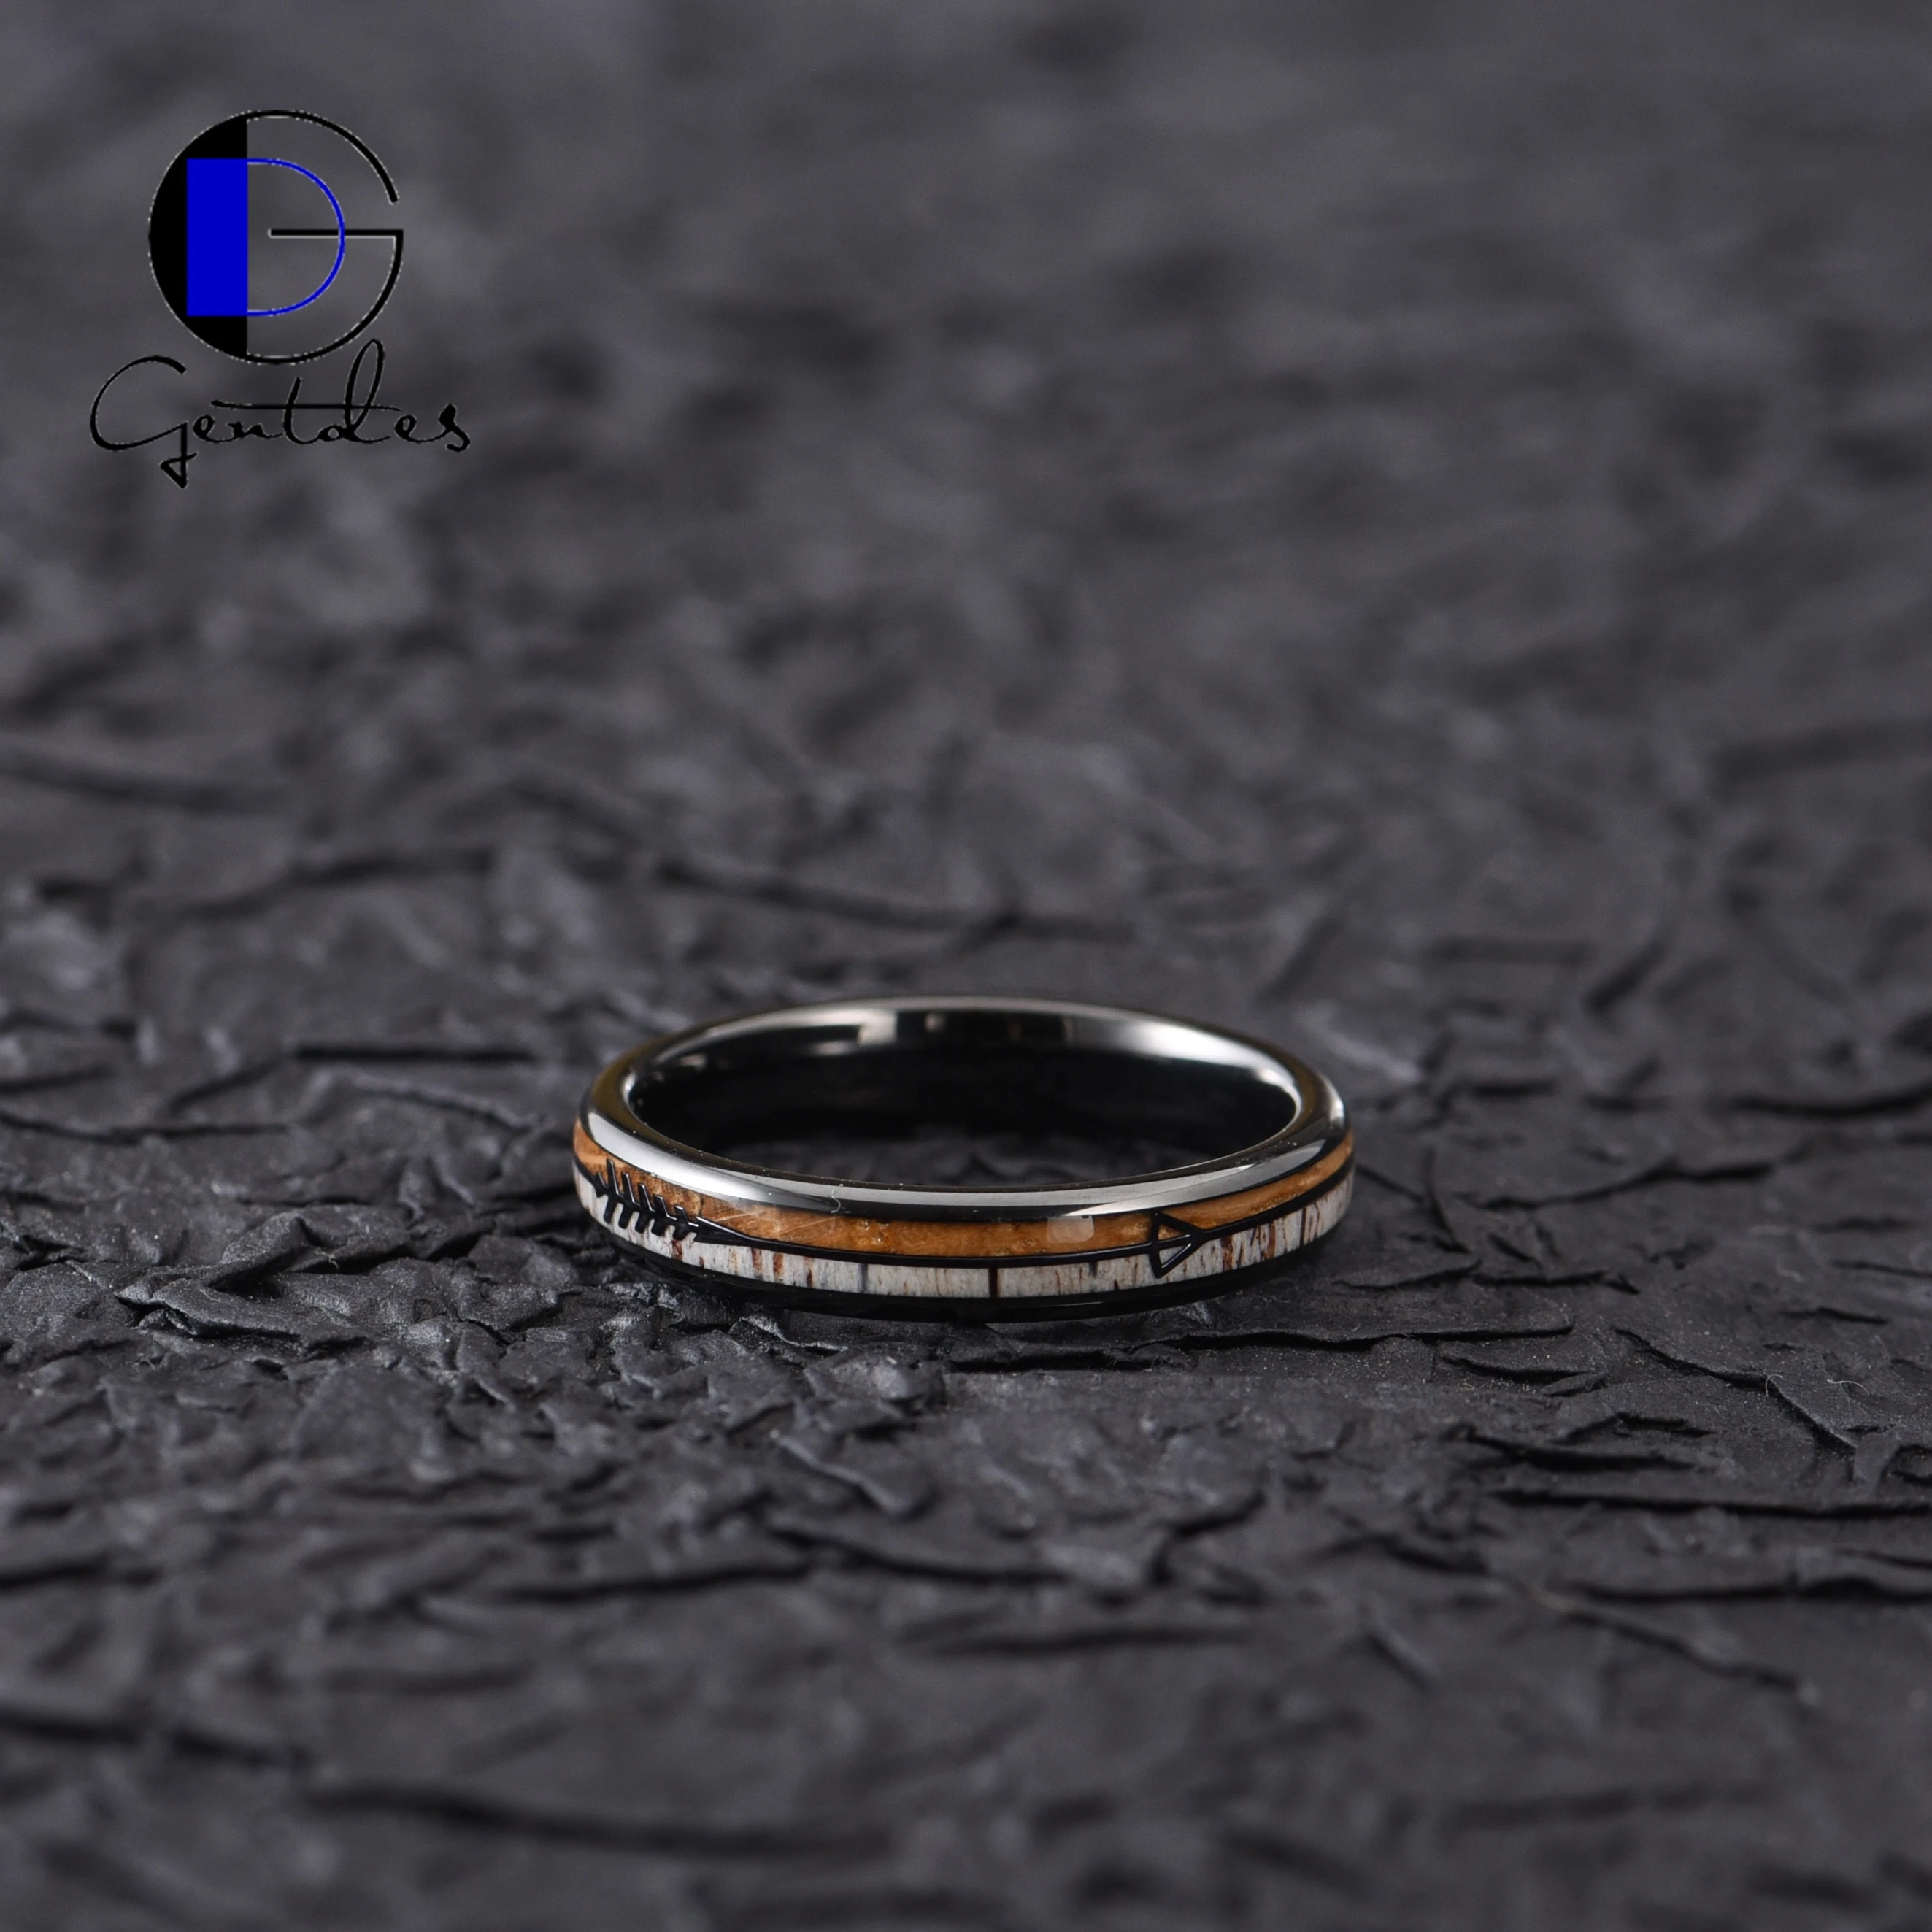 Gentdes Jewelry Antler Whisky Barrel Wood Inlay Black Ceramic Ring